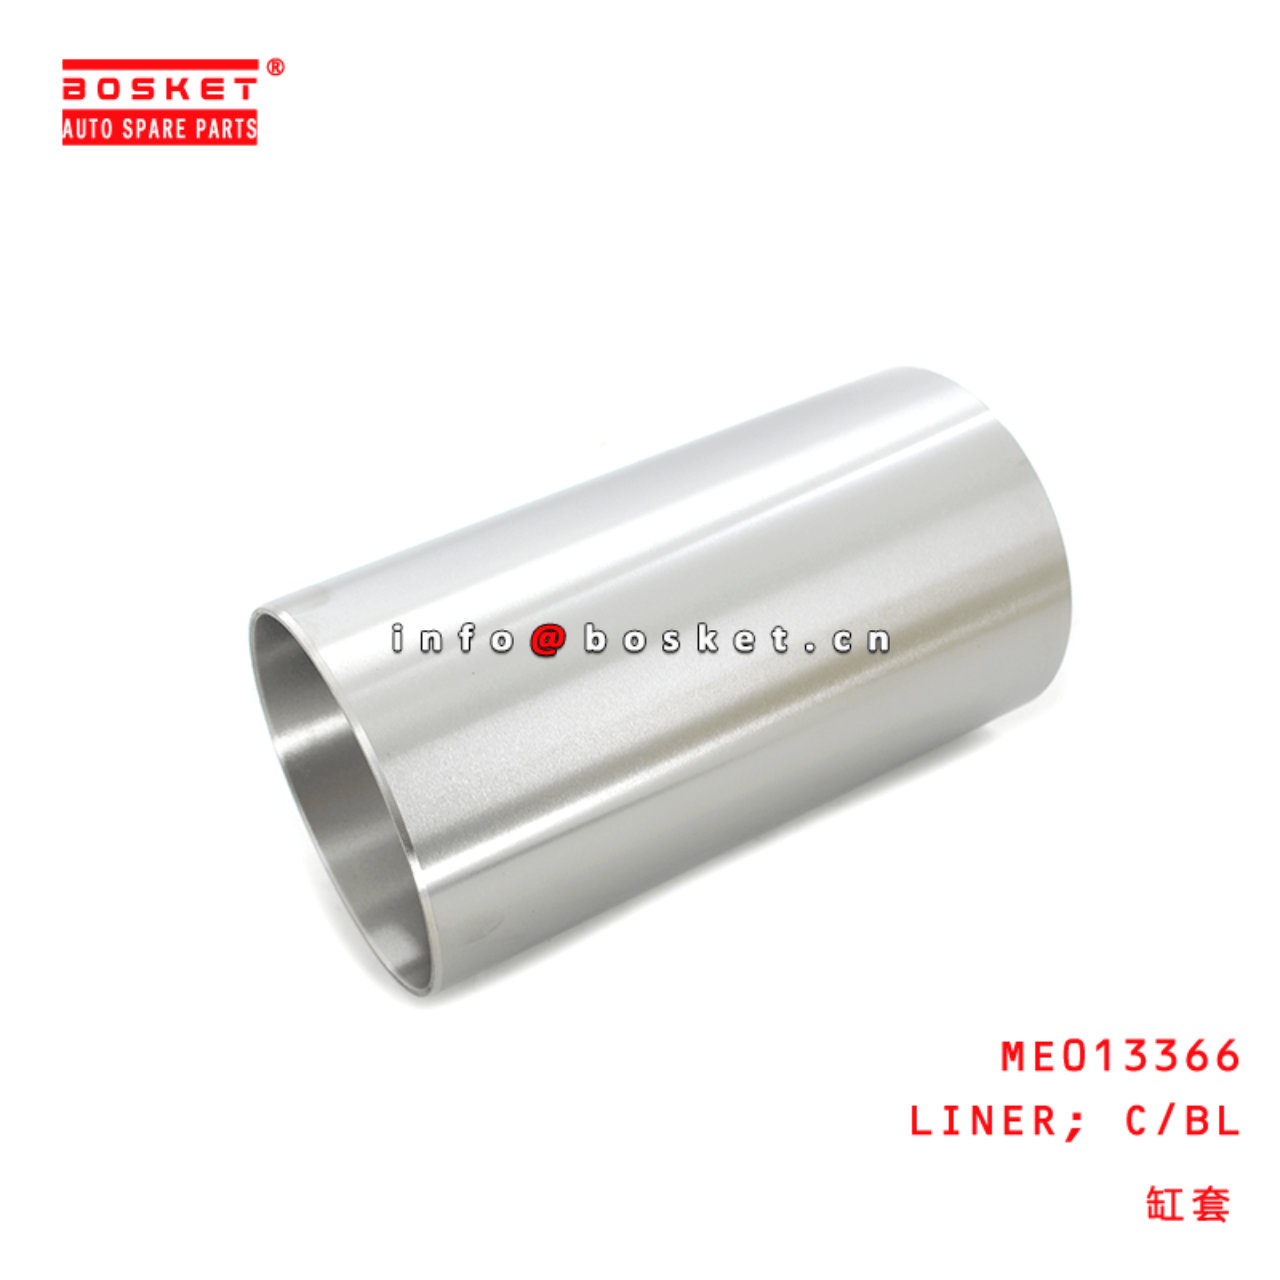  ME013366 Cylinder Block Liner Suitable For MITSUBISHI FUSO 4D34 4D32